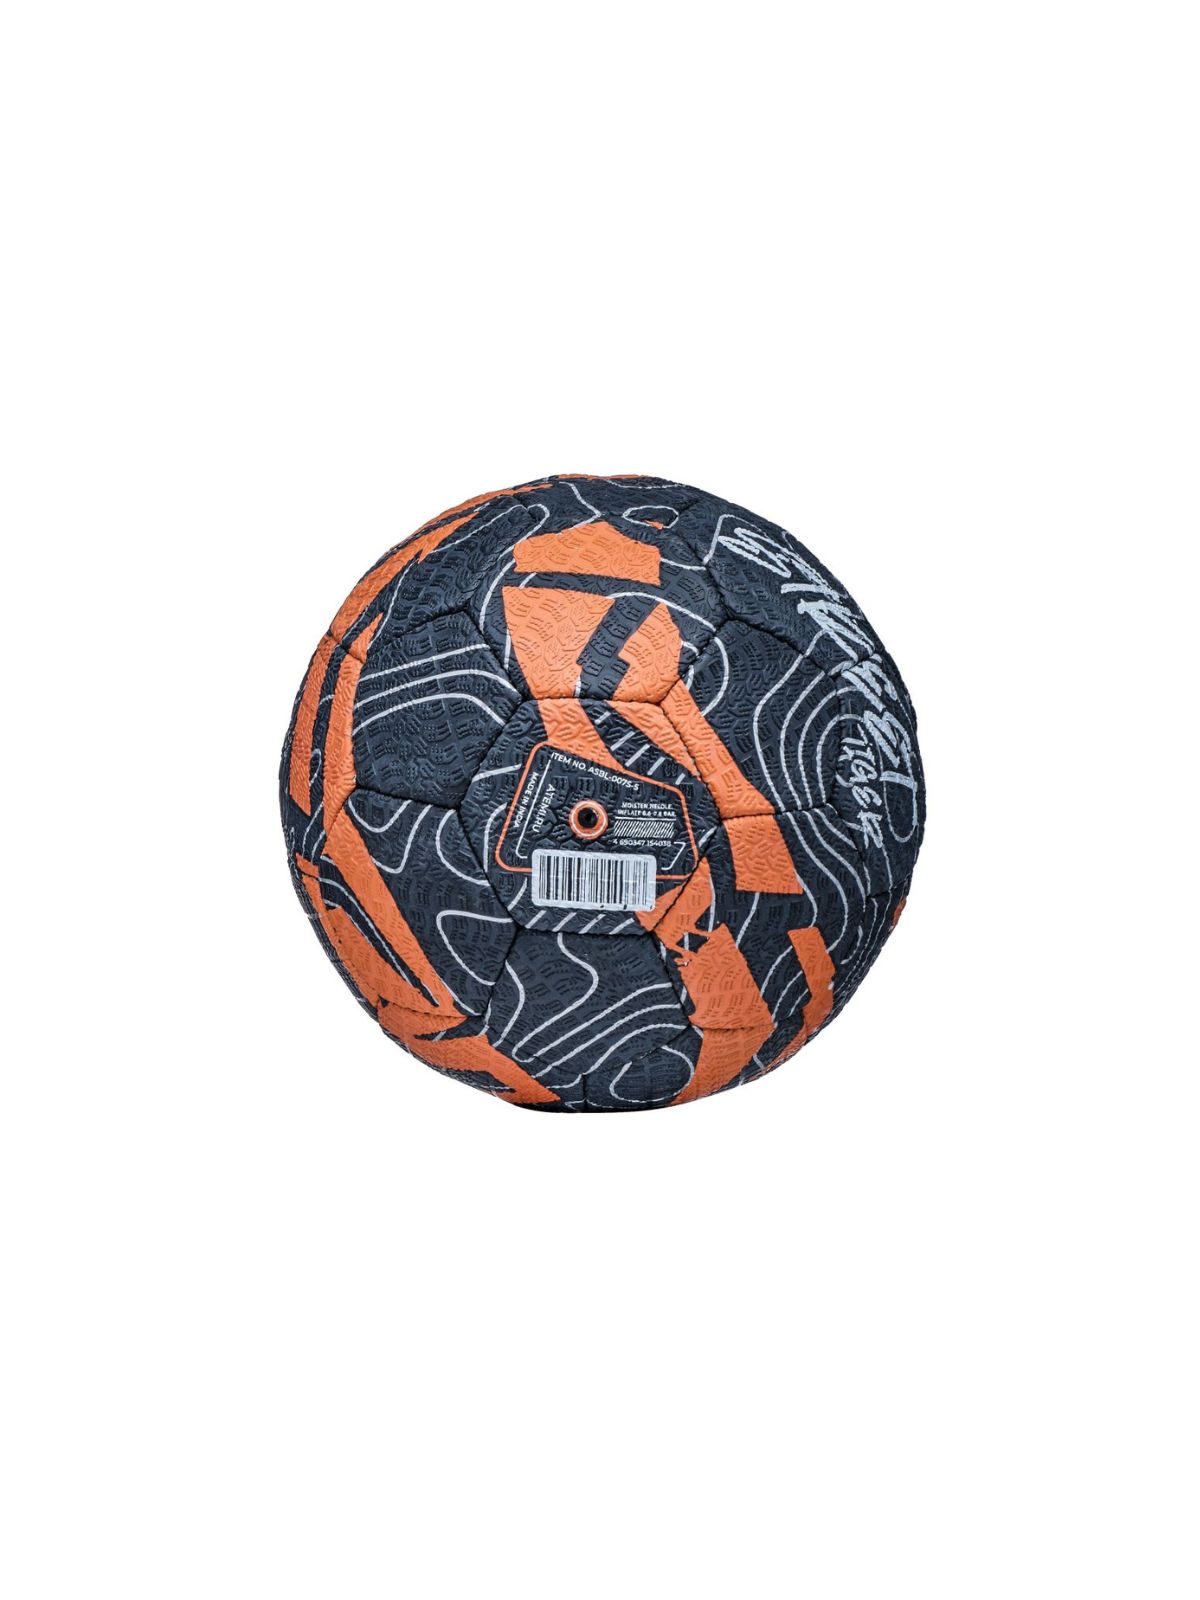 Мяч футбольный Atemi Tiger Street, резина, р.5, р/ш, окруж 68-71